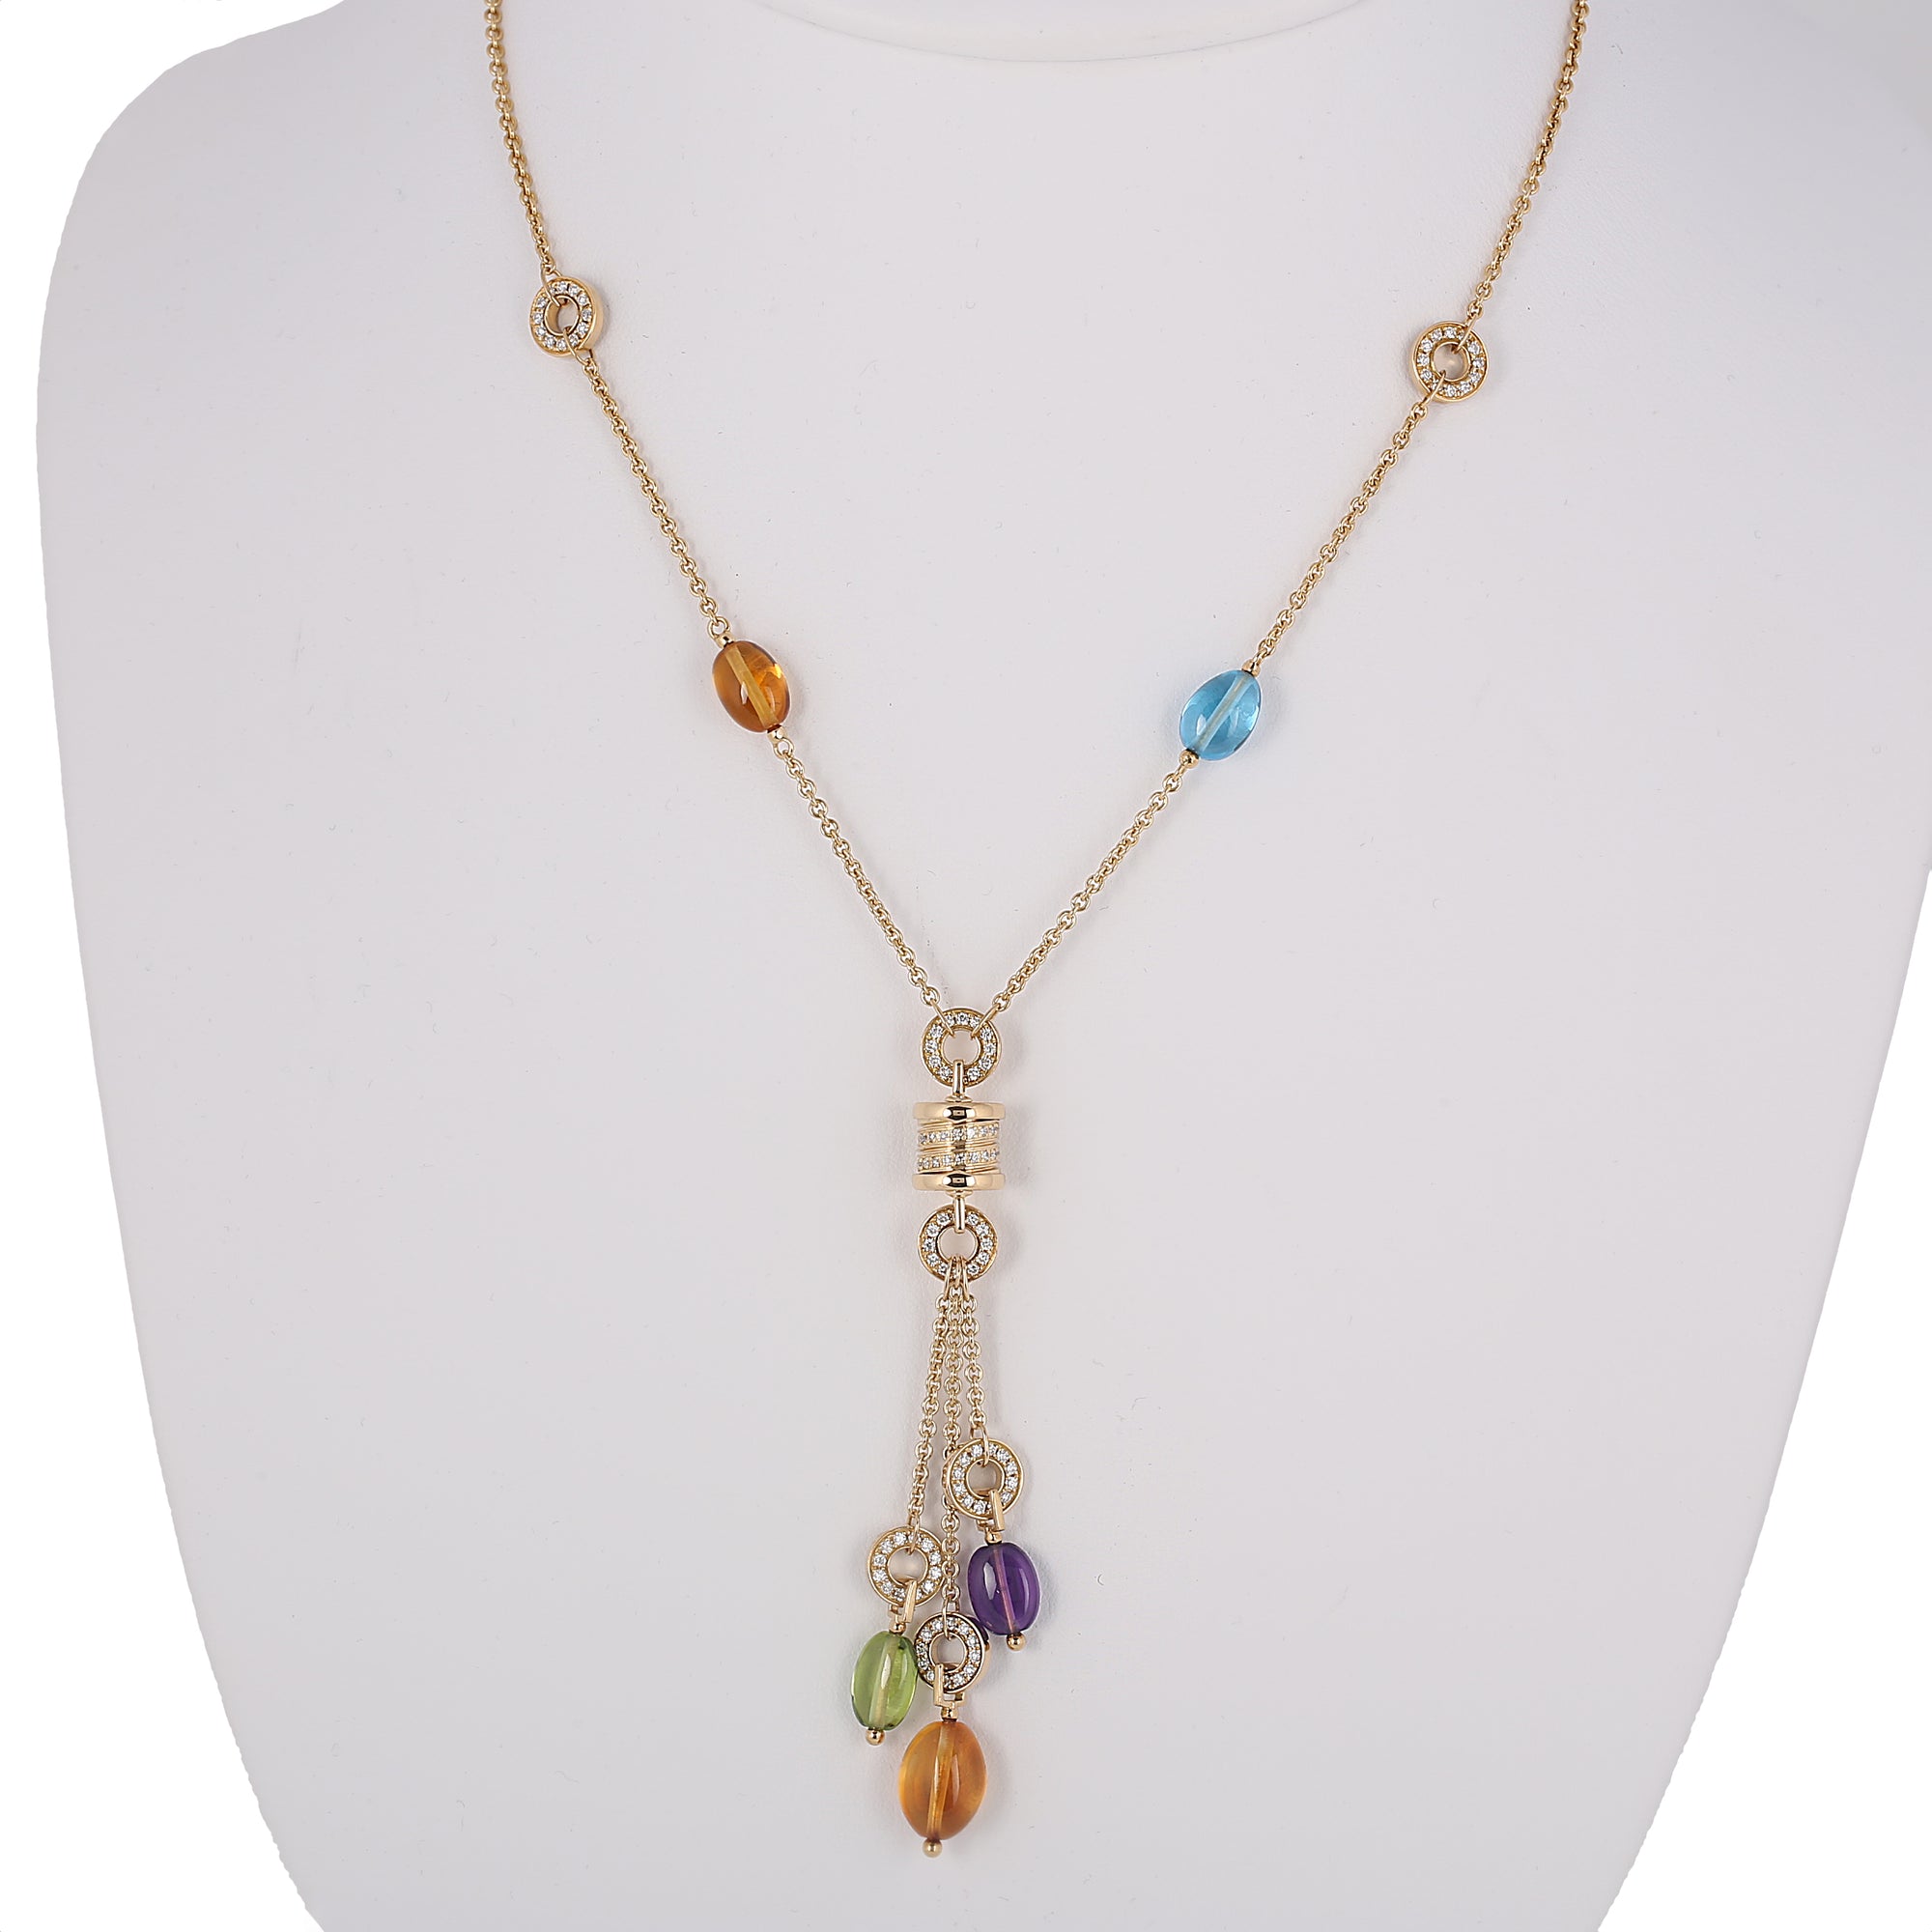 bvlgari necklace colored stones